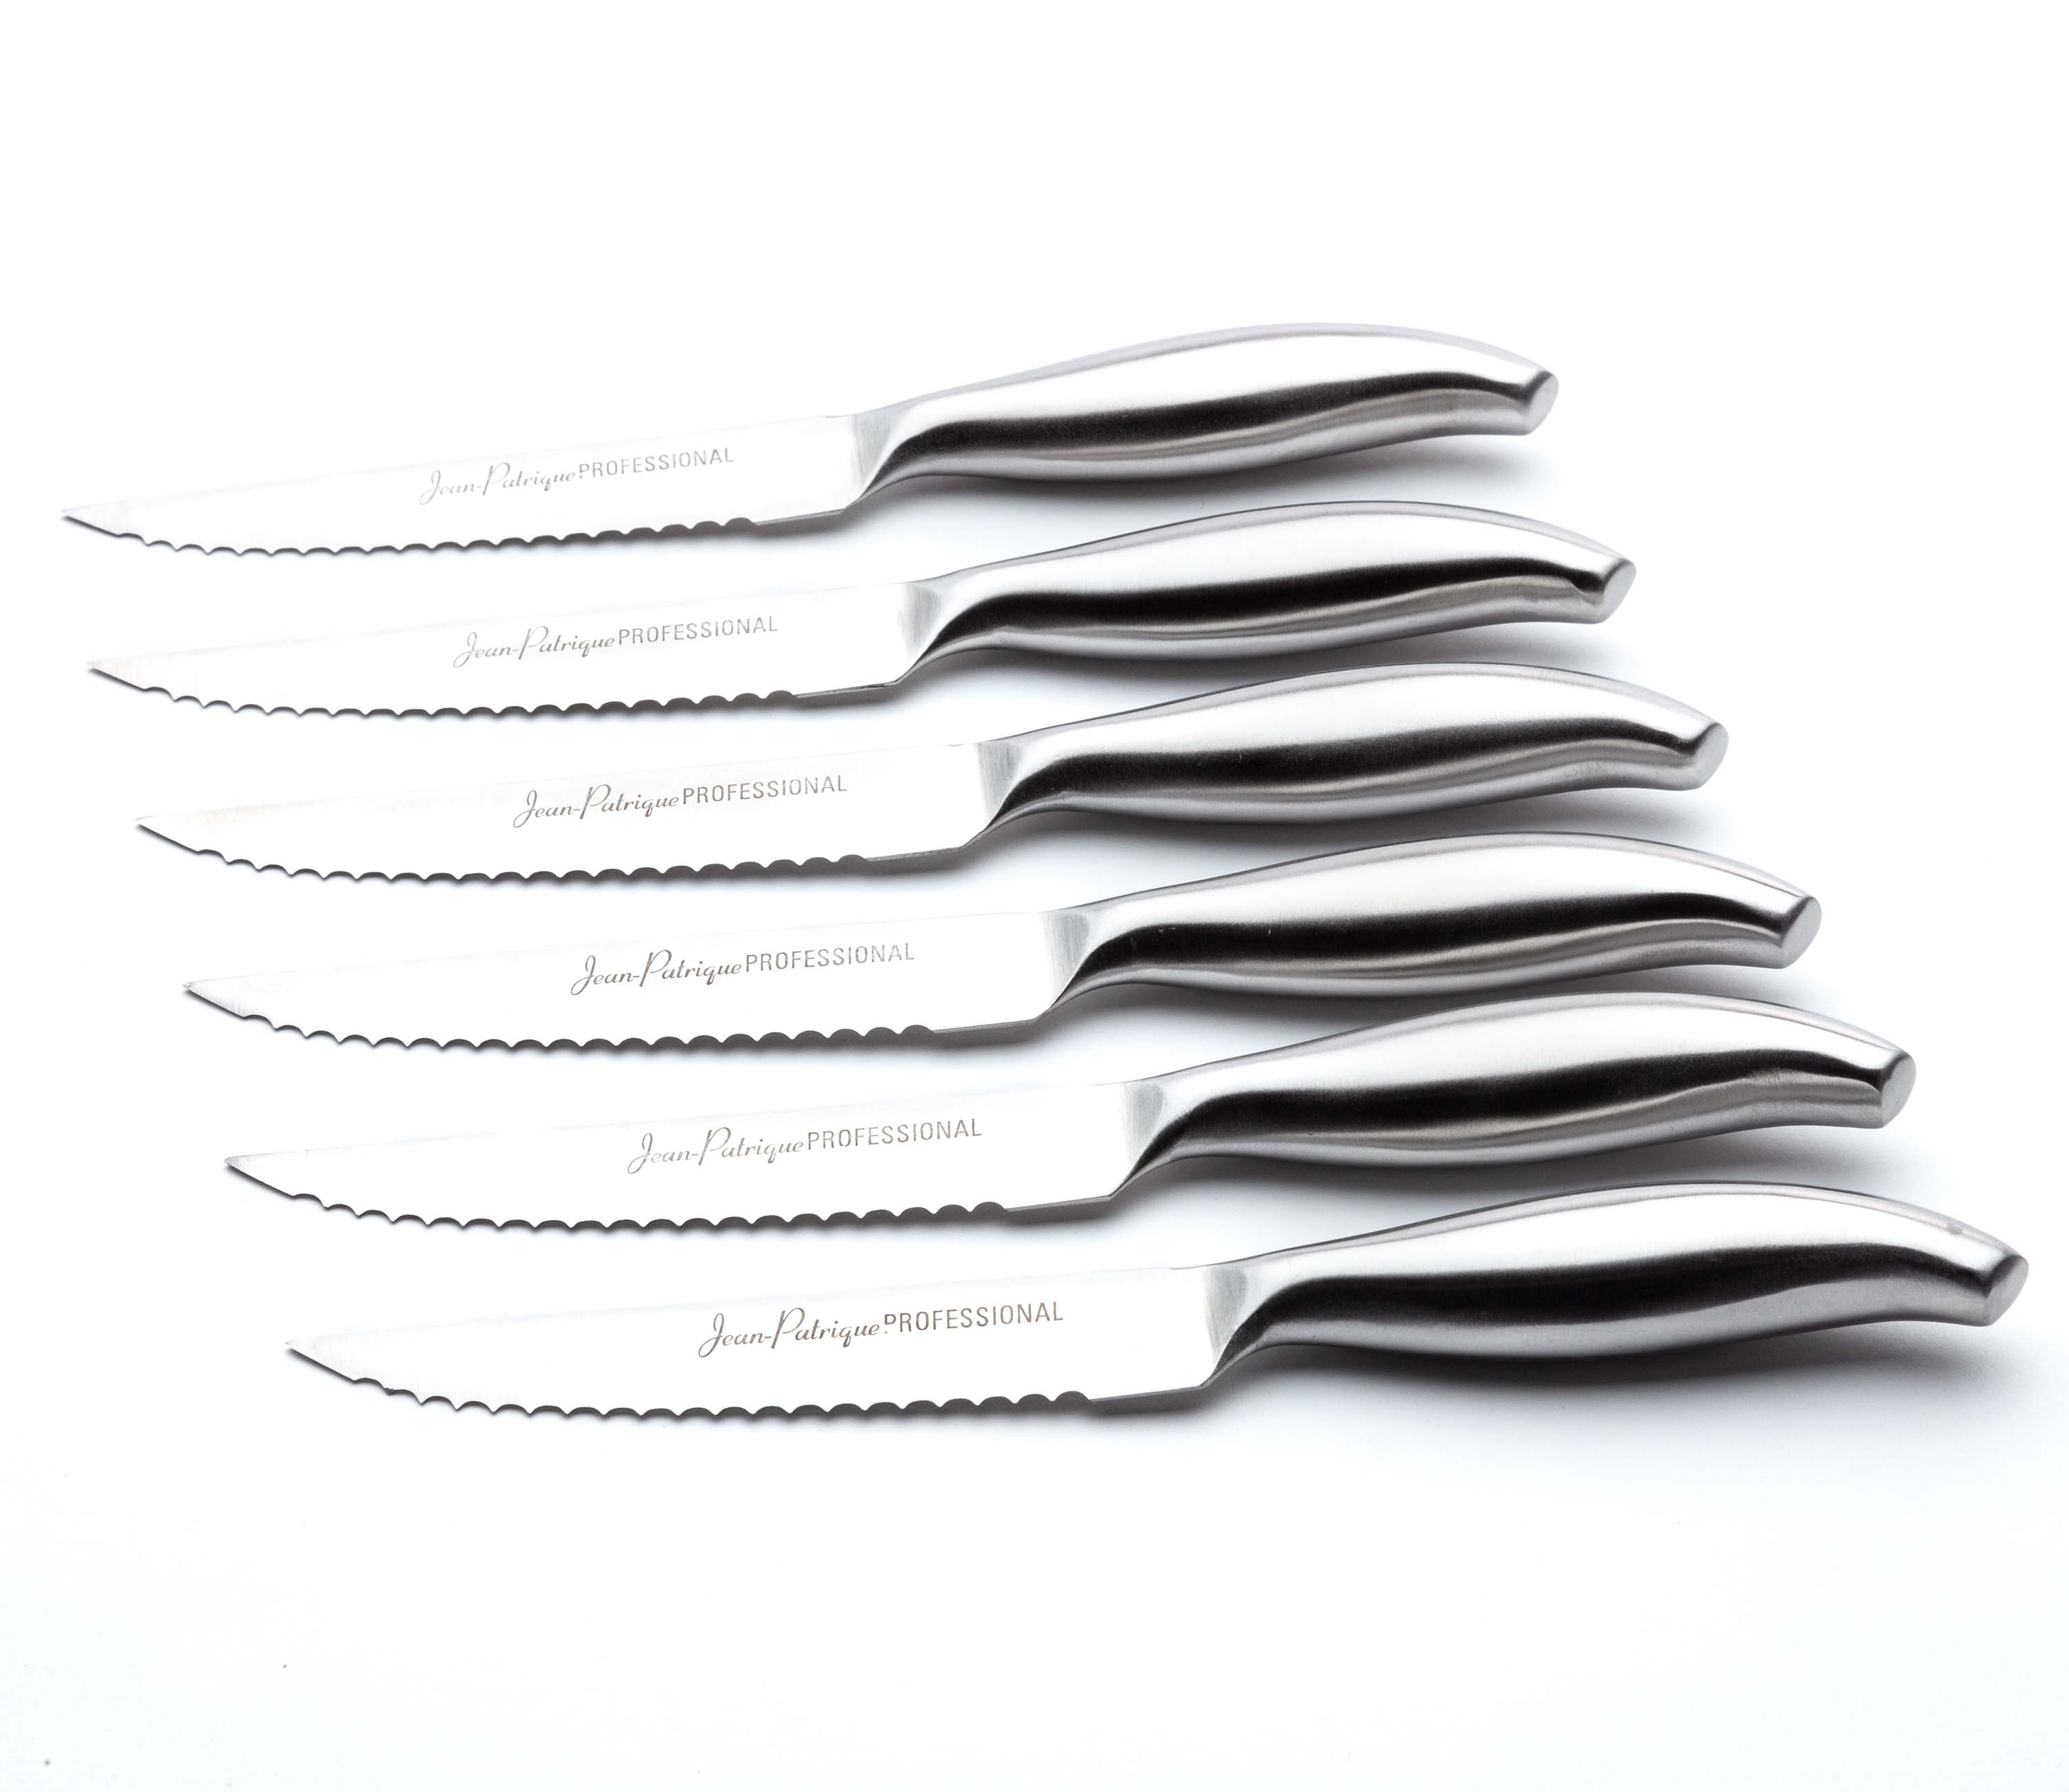 6 Piece Metallic Knife Set With Case, Sharp Kitchen Knife Set Professional,  Dishwasher Safe Stainless Steel Knives Set For Cooking, Black - Scratch